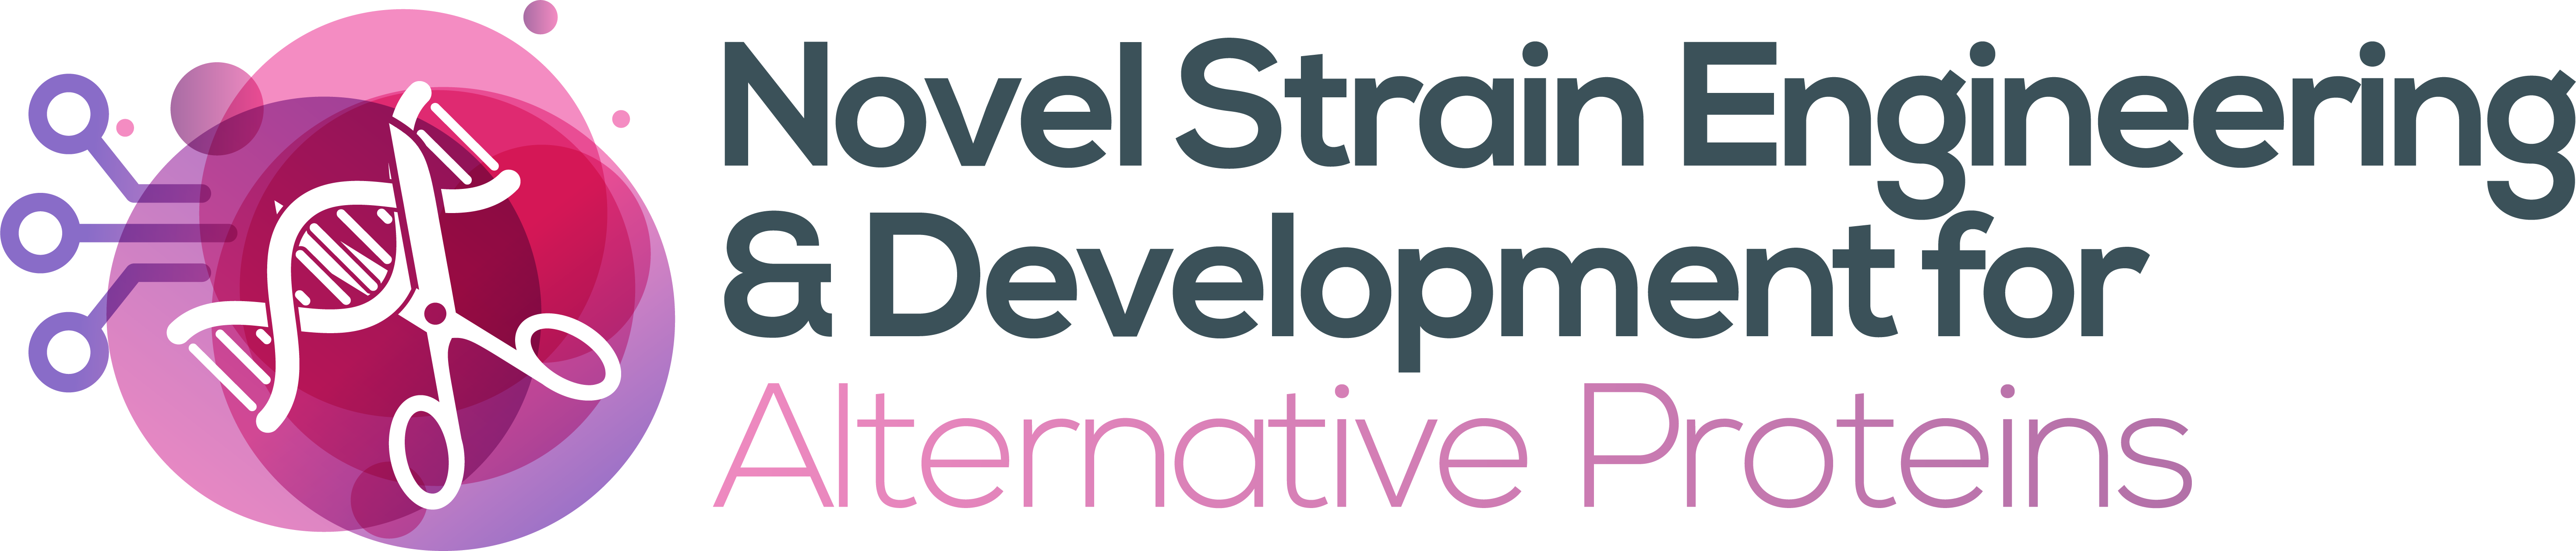 Novel Strain Engineering & Development for Alternative Proteins Summit Logo